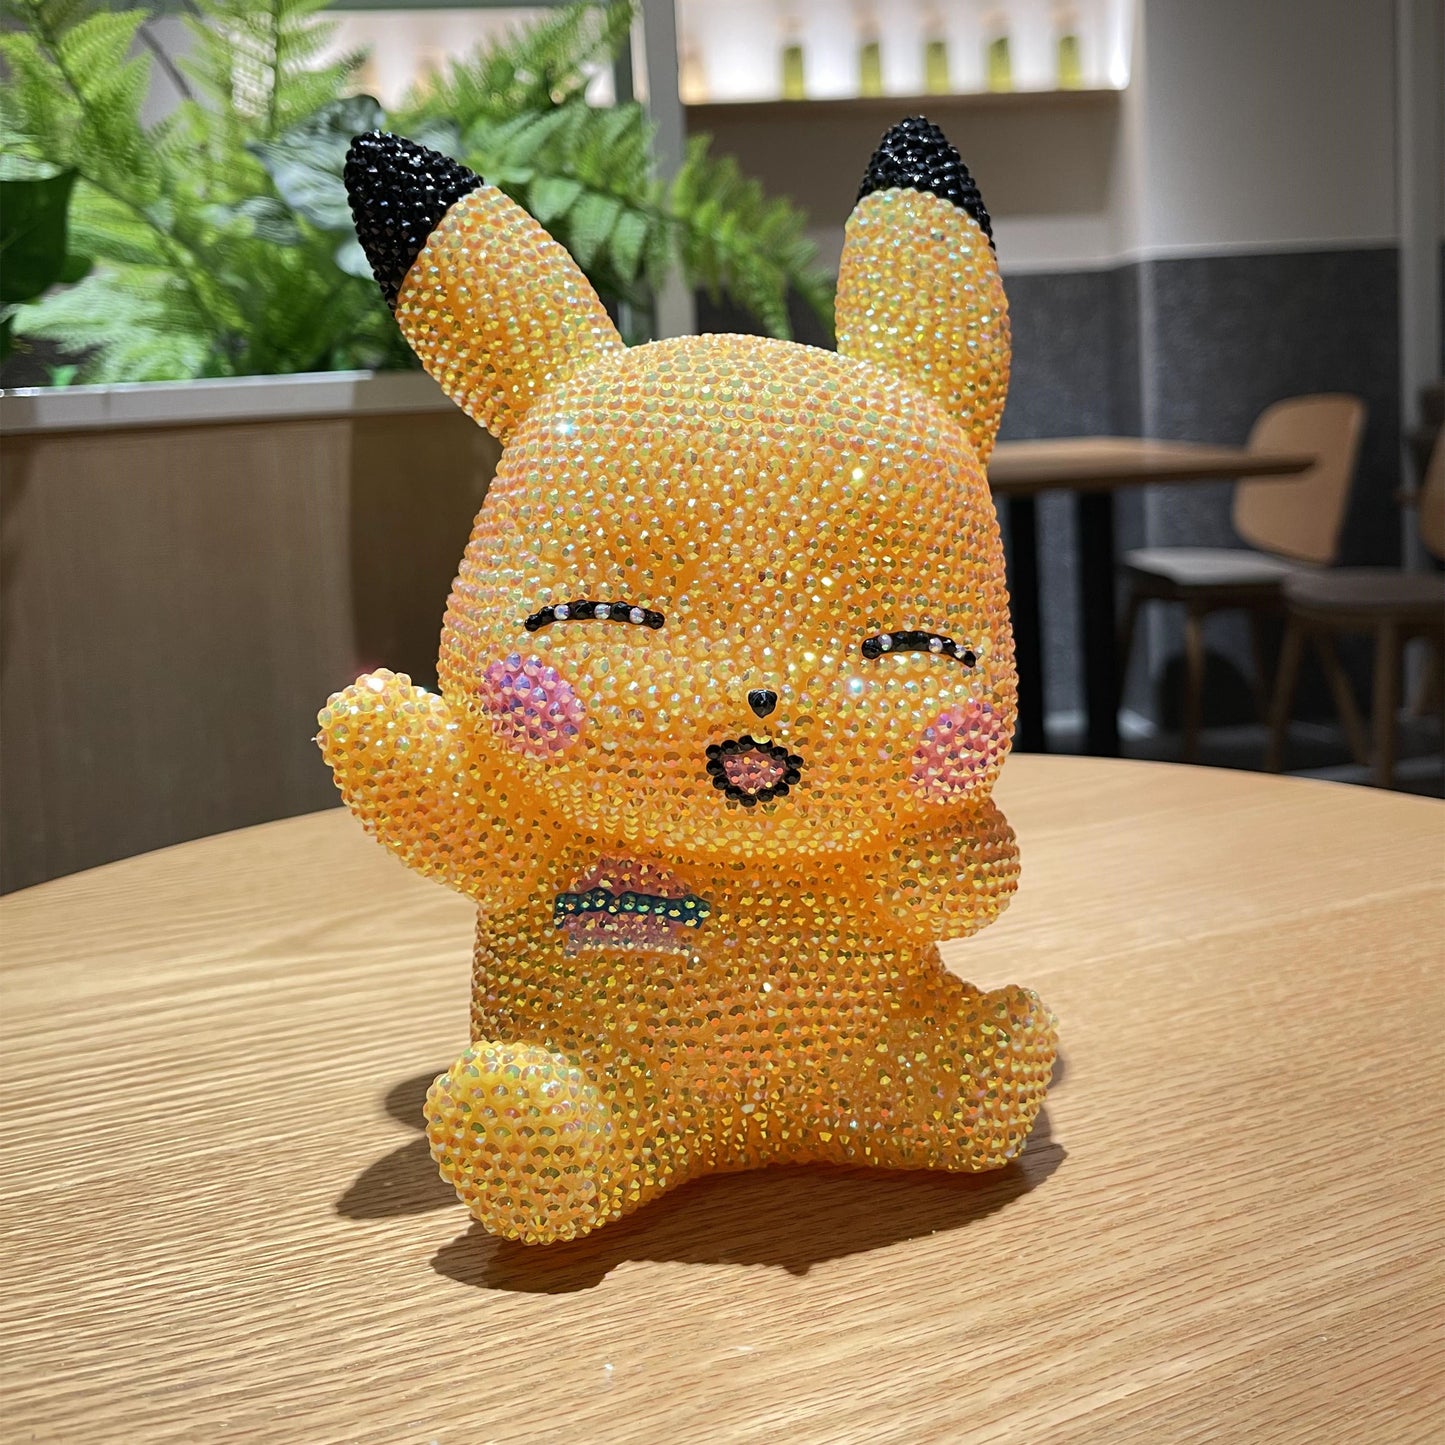 DIY Pikachu - Crystal Rhinestone Full Diamond Painting Piggy Bank (No glue)